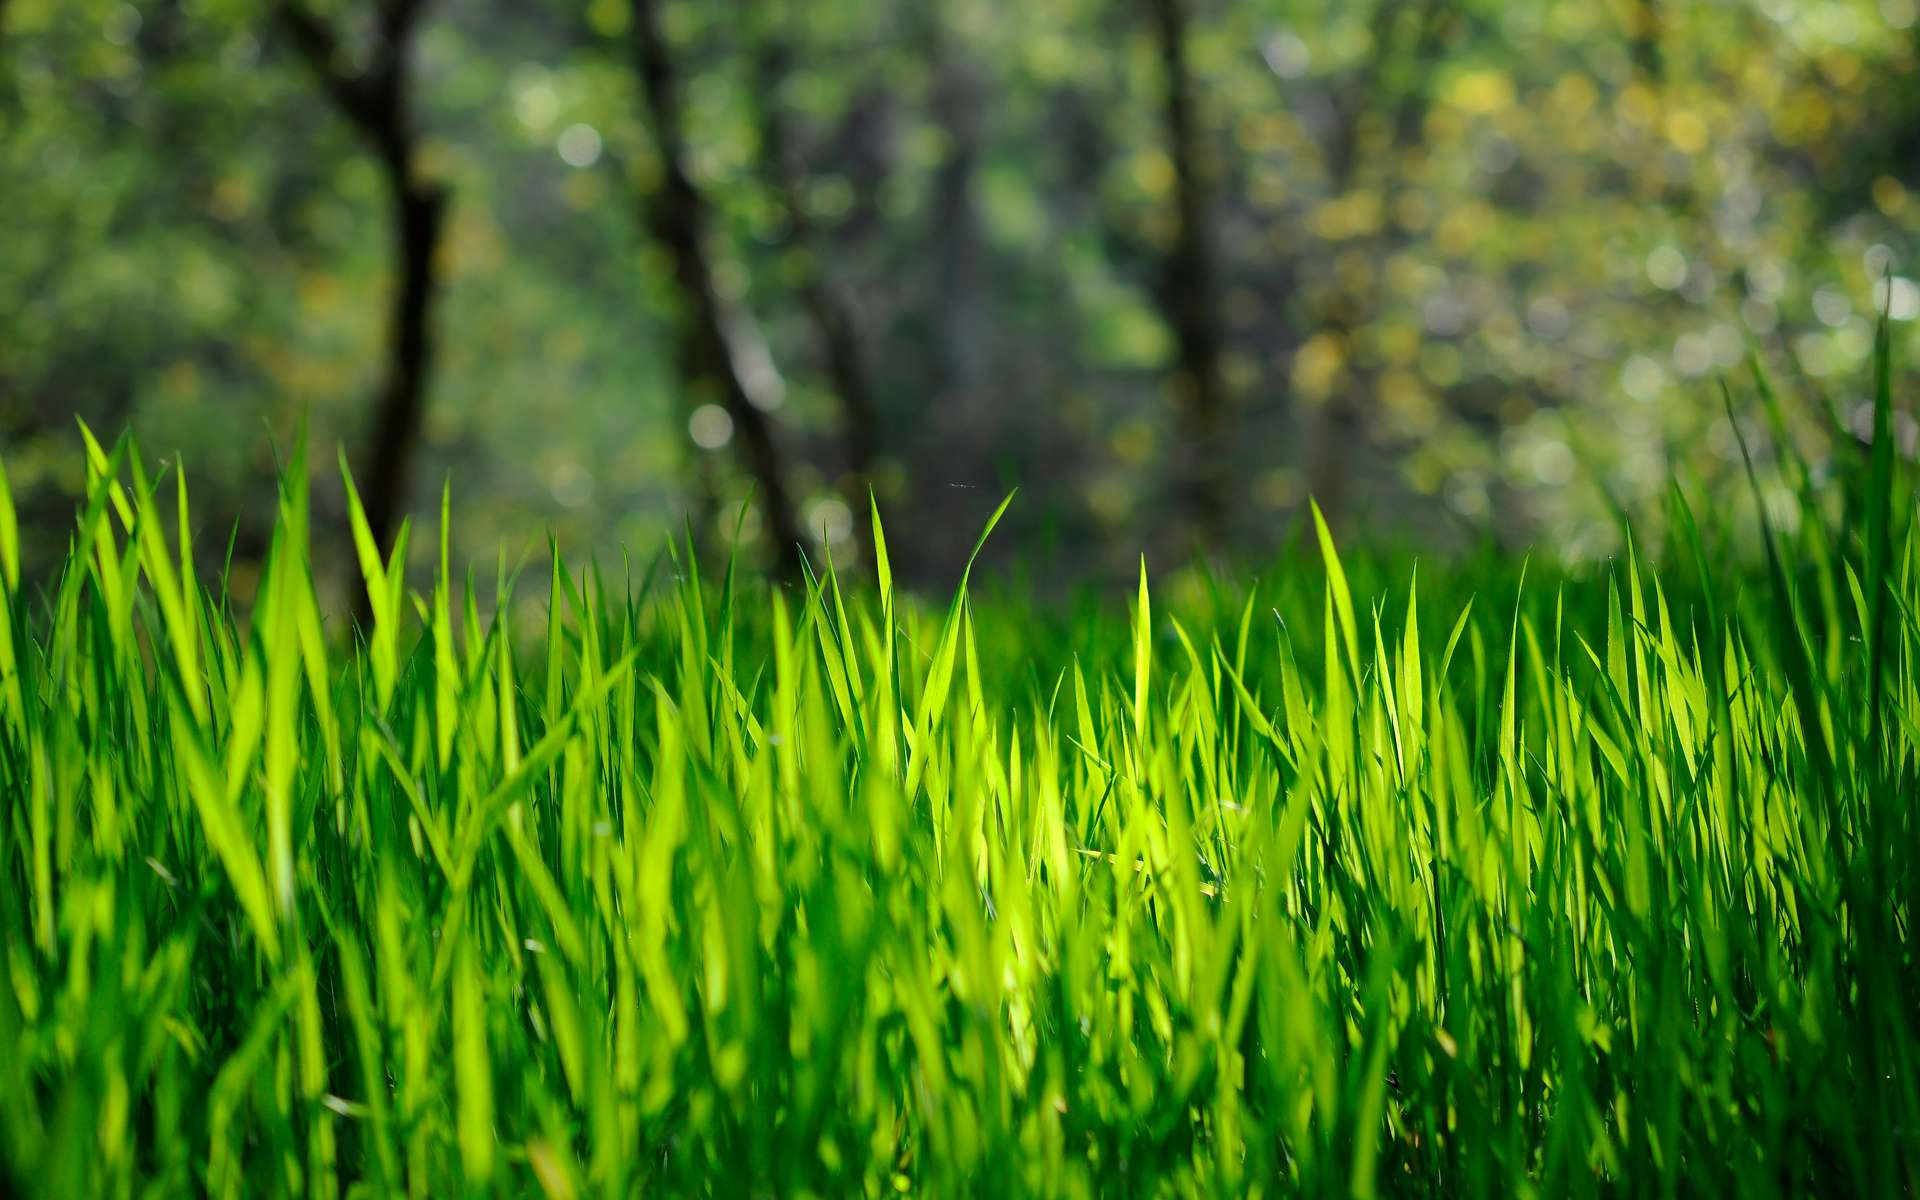  Grass  HD Wallpaper  Background Image 1920x1200 ID 